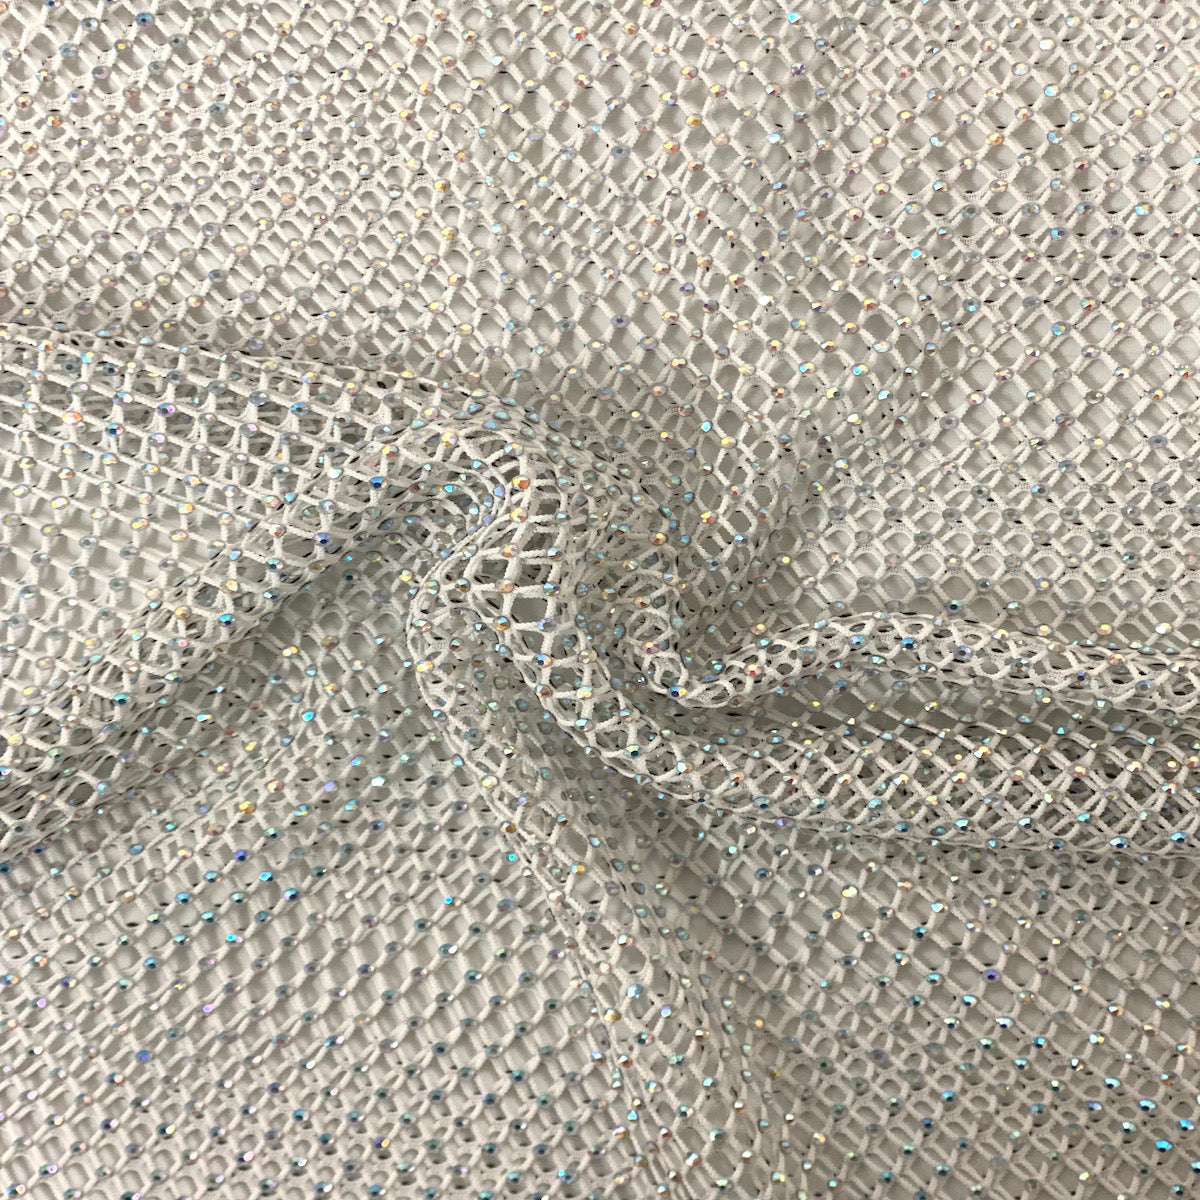 Fishnet Iridescent Rhinestones Fabric - Hunter Green - Spandex Fabric